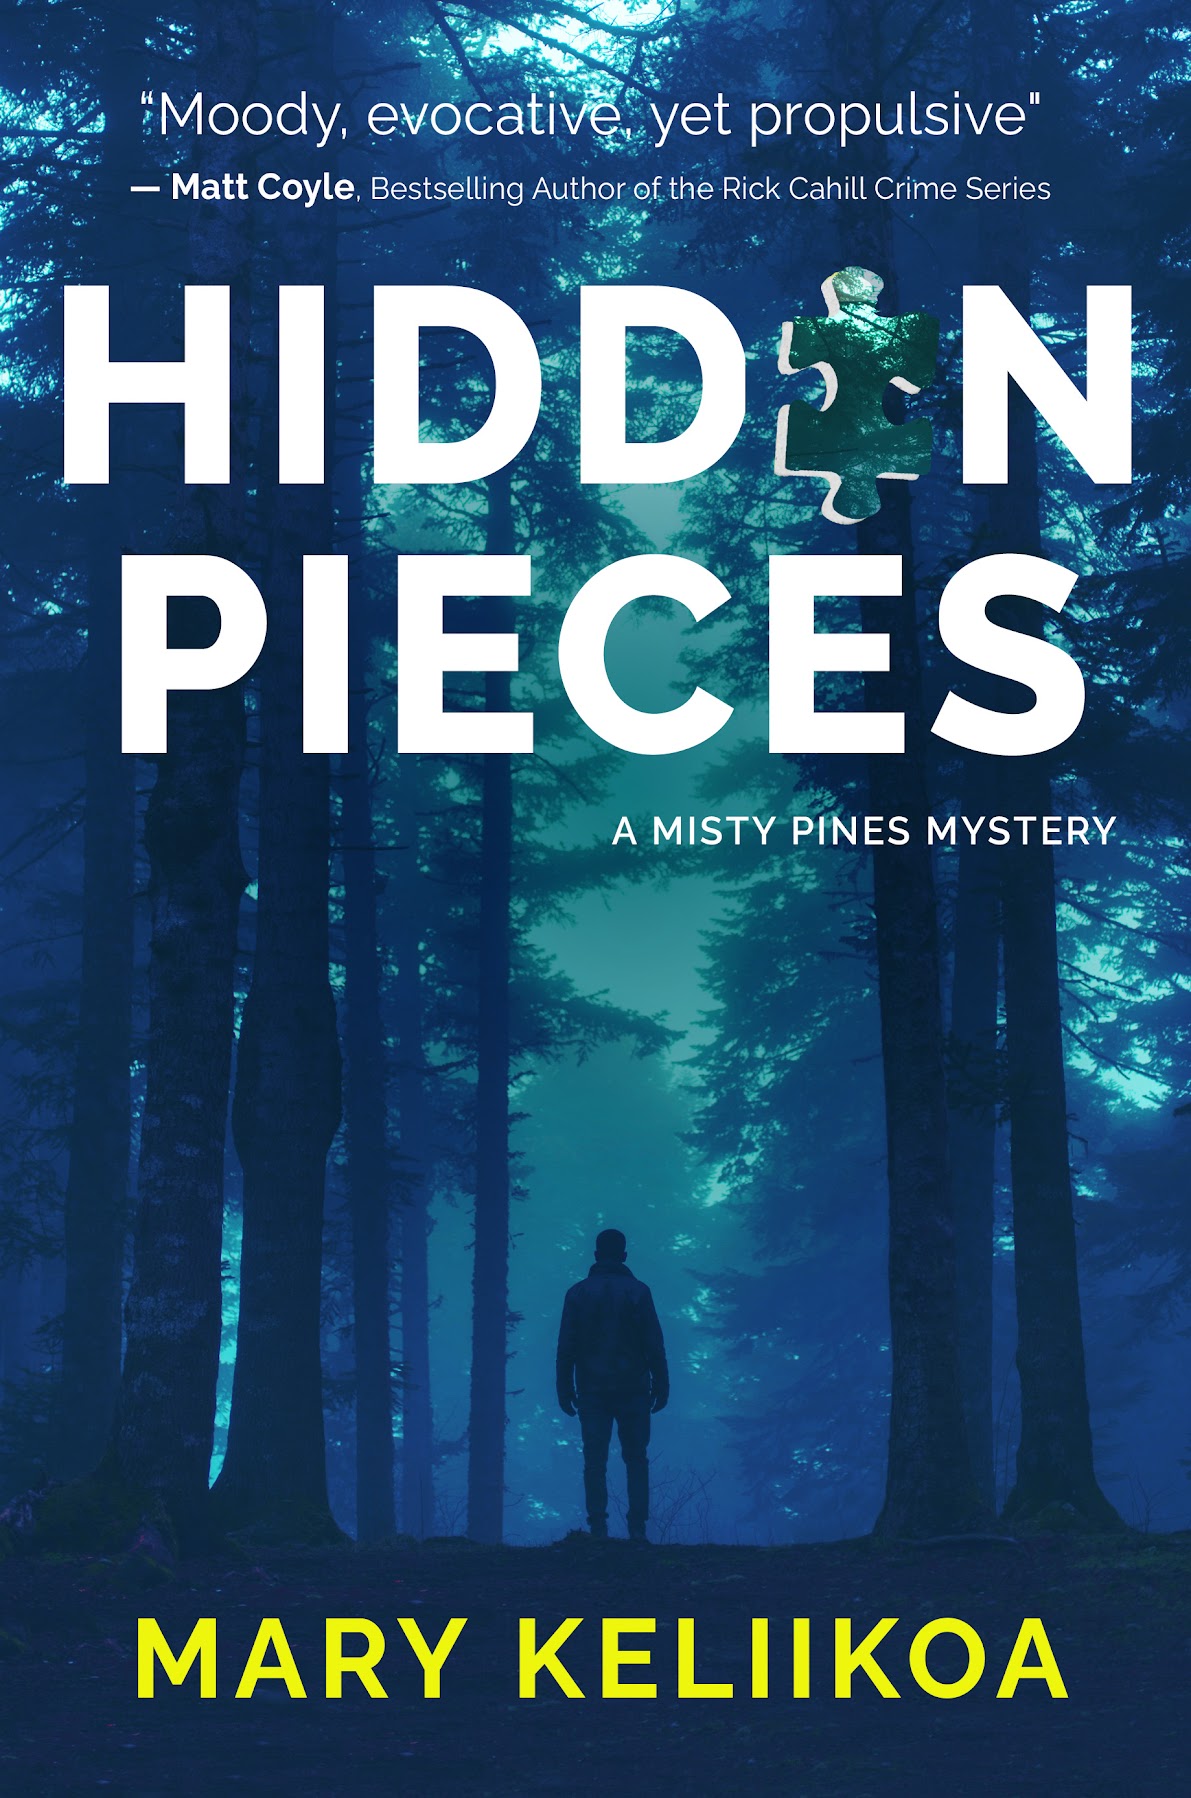 Hidden Pieces by Mary Keliikoa